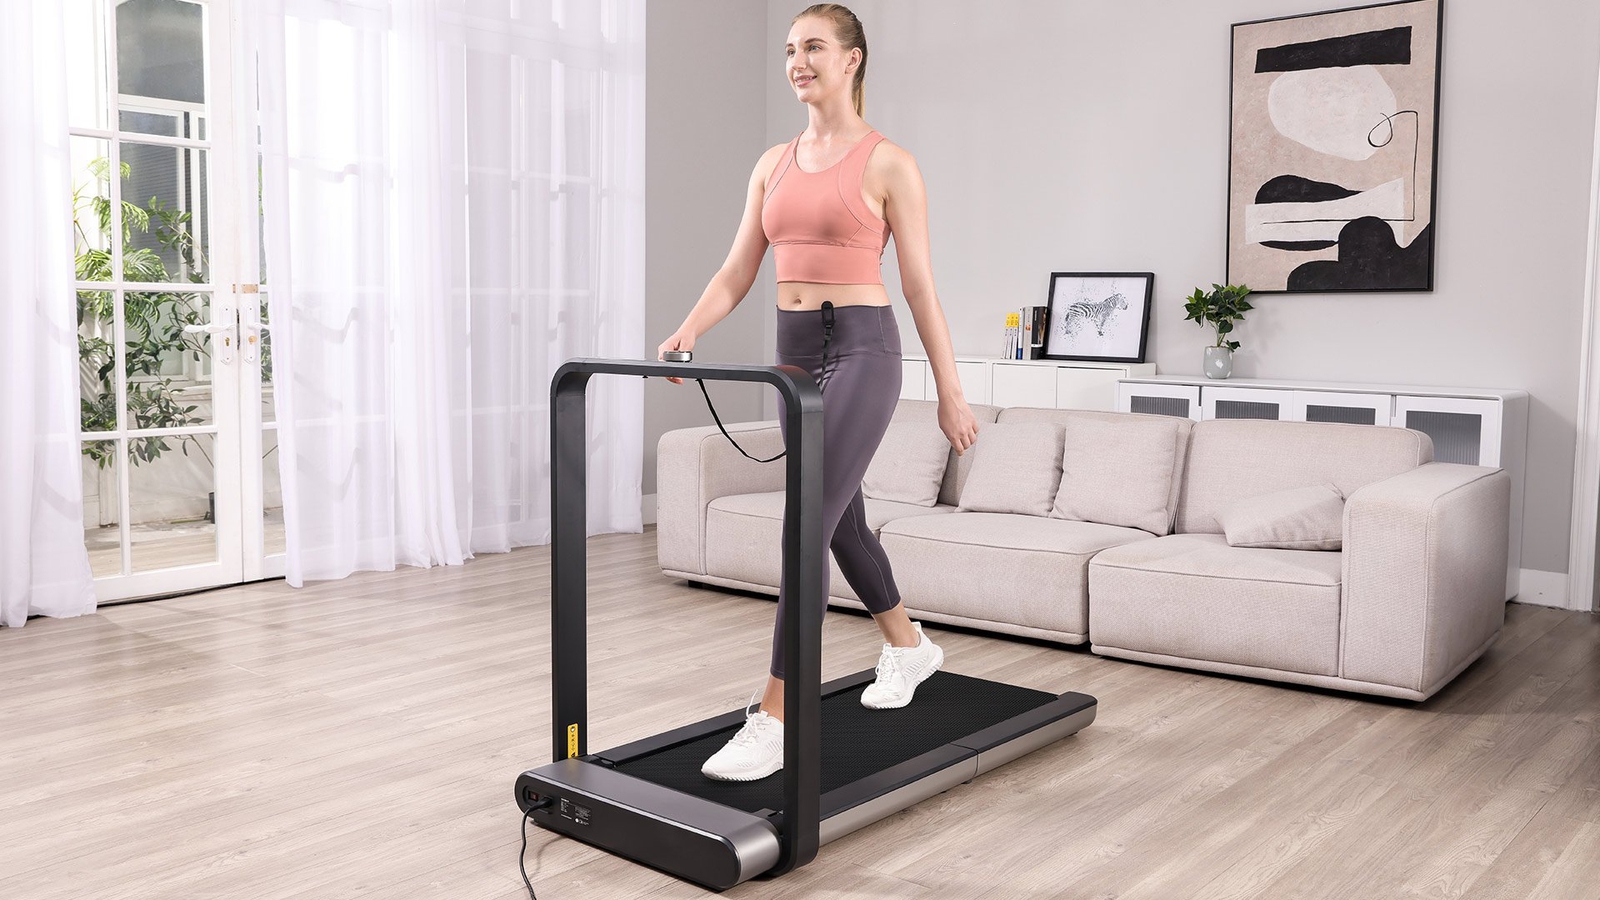 Double Fold Treadmill By Walkingpad 2601.3747 1650530476750 